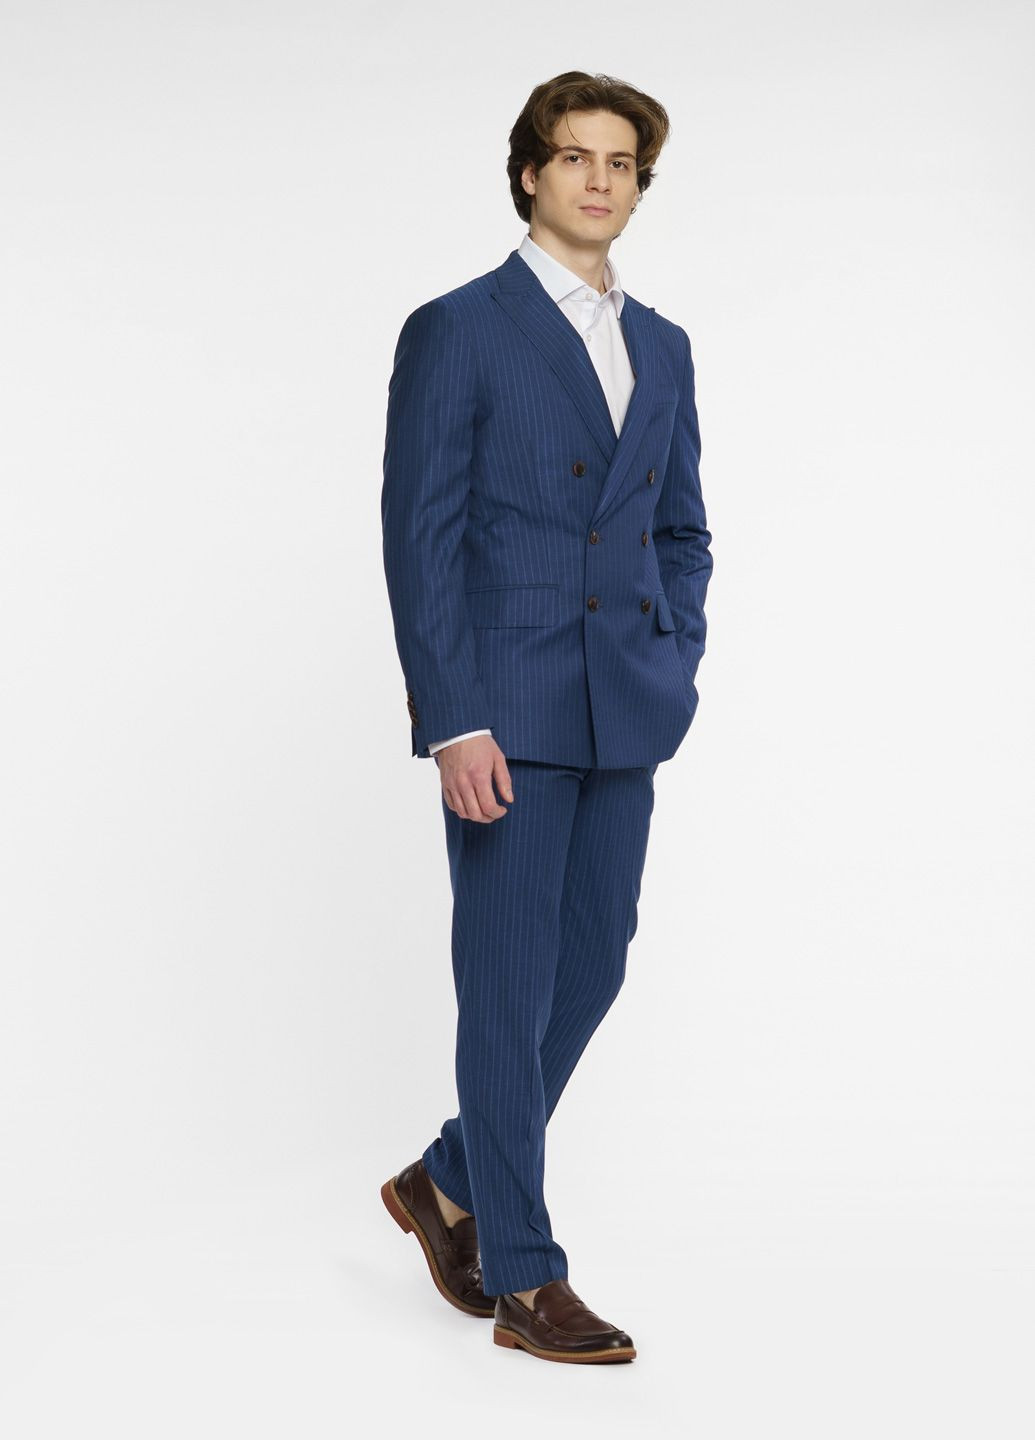 Синий демисезонный костюм мужской синий Arber LONDON NEW/MARCO